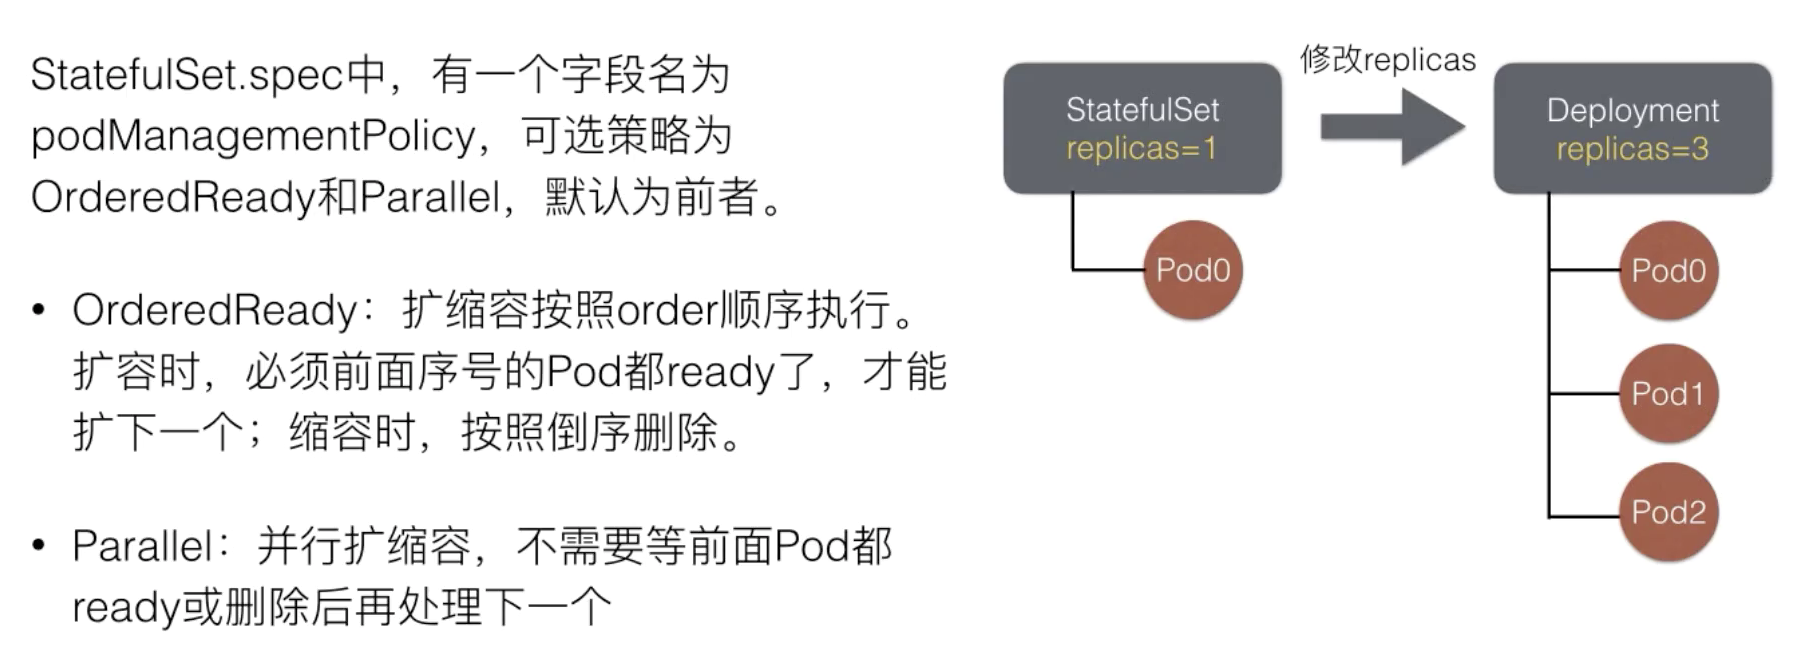 应用编排管理StatefulSet - 图28